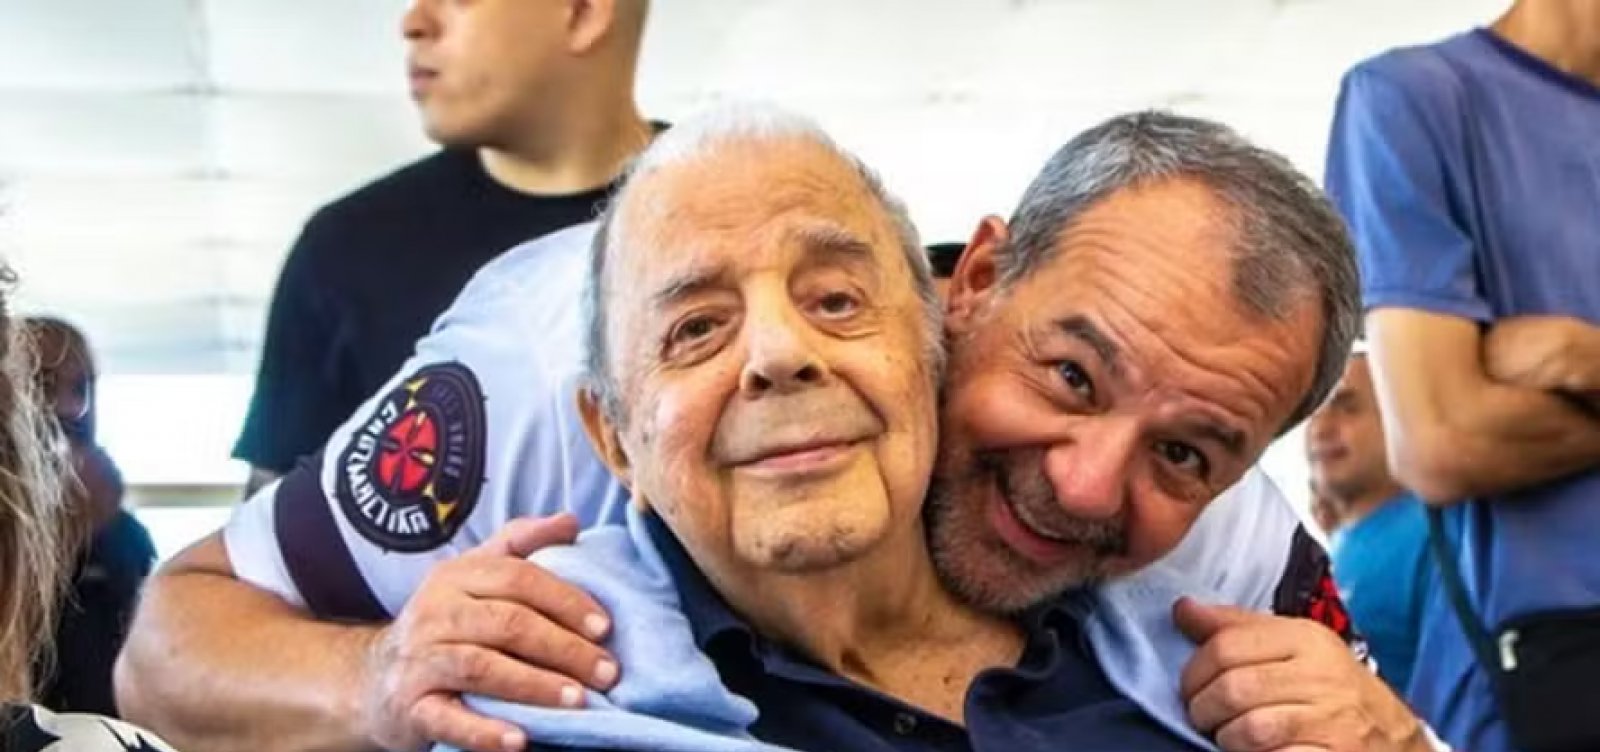 Aos 87 anos, morre o jornalista e ex-vereador Sérgio Cabral no Rio de Janeiro 